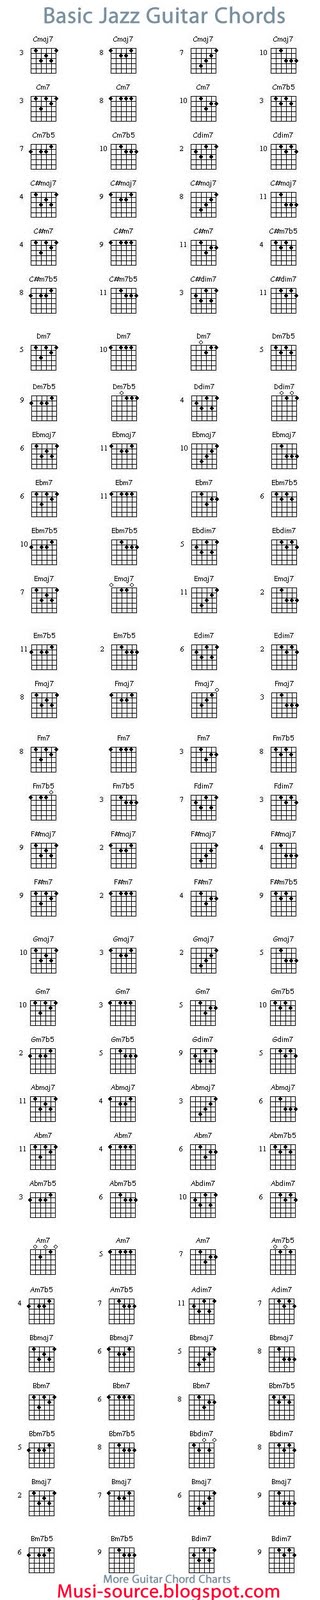 Musicians Resources: Basic Jazz Guitar Chord Chart